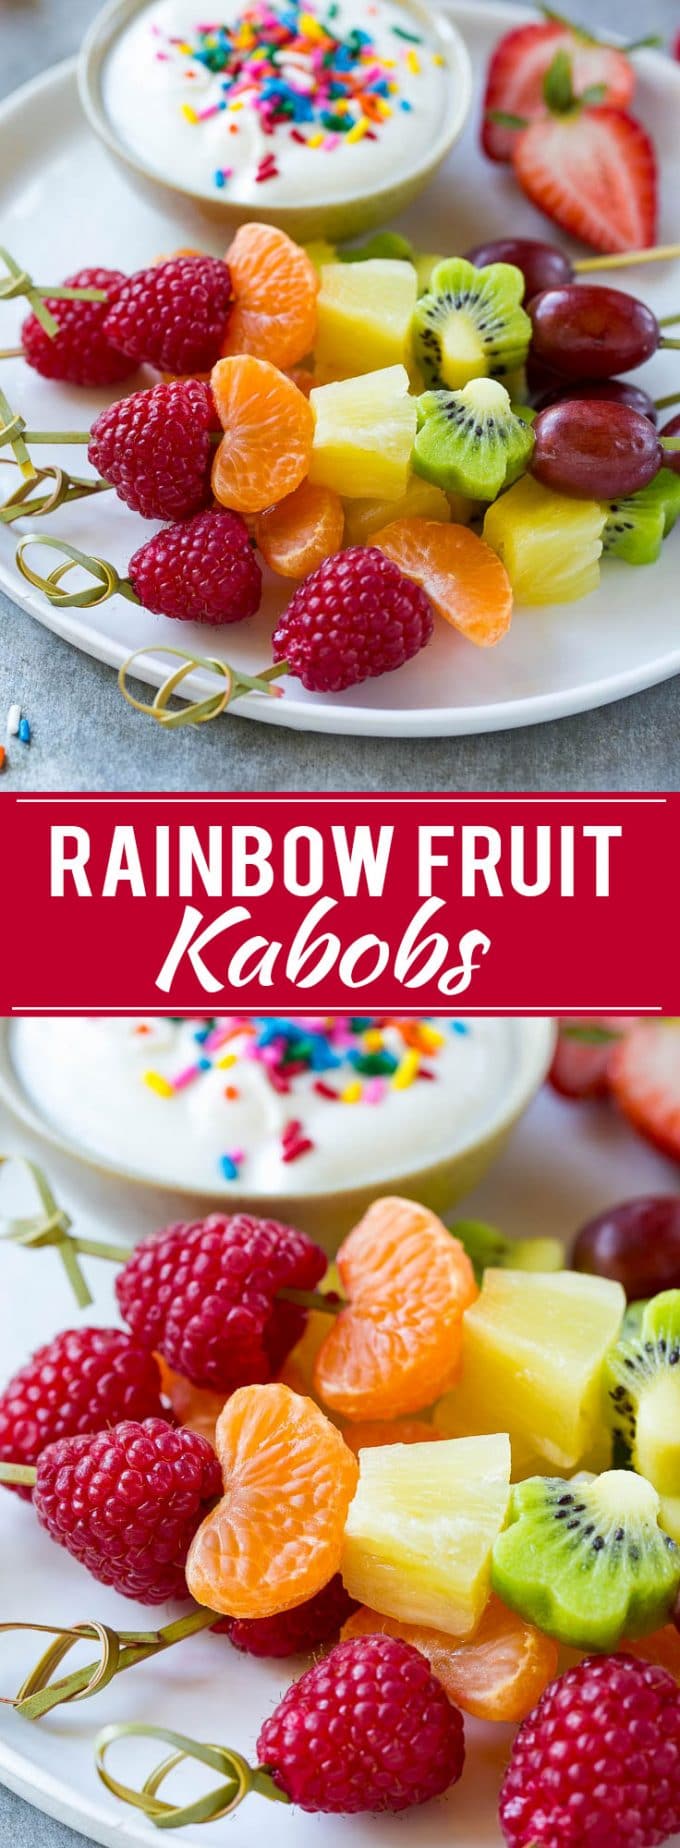 Fruit Kabobs Recipe | Fruit Skewers | Fruit Recipe | Snack Recipe | Kids Snack #fruit #healthy #kabobs #snack #dinneratthezoo